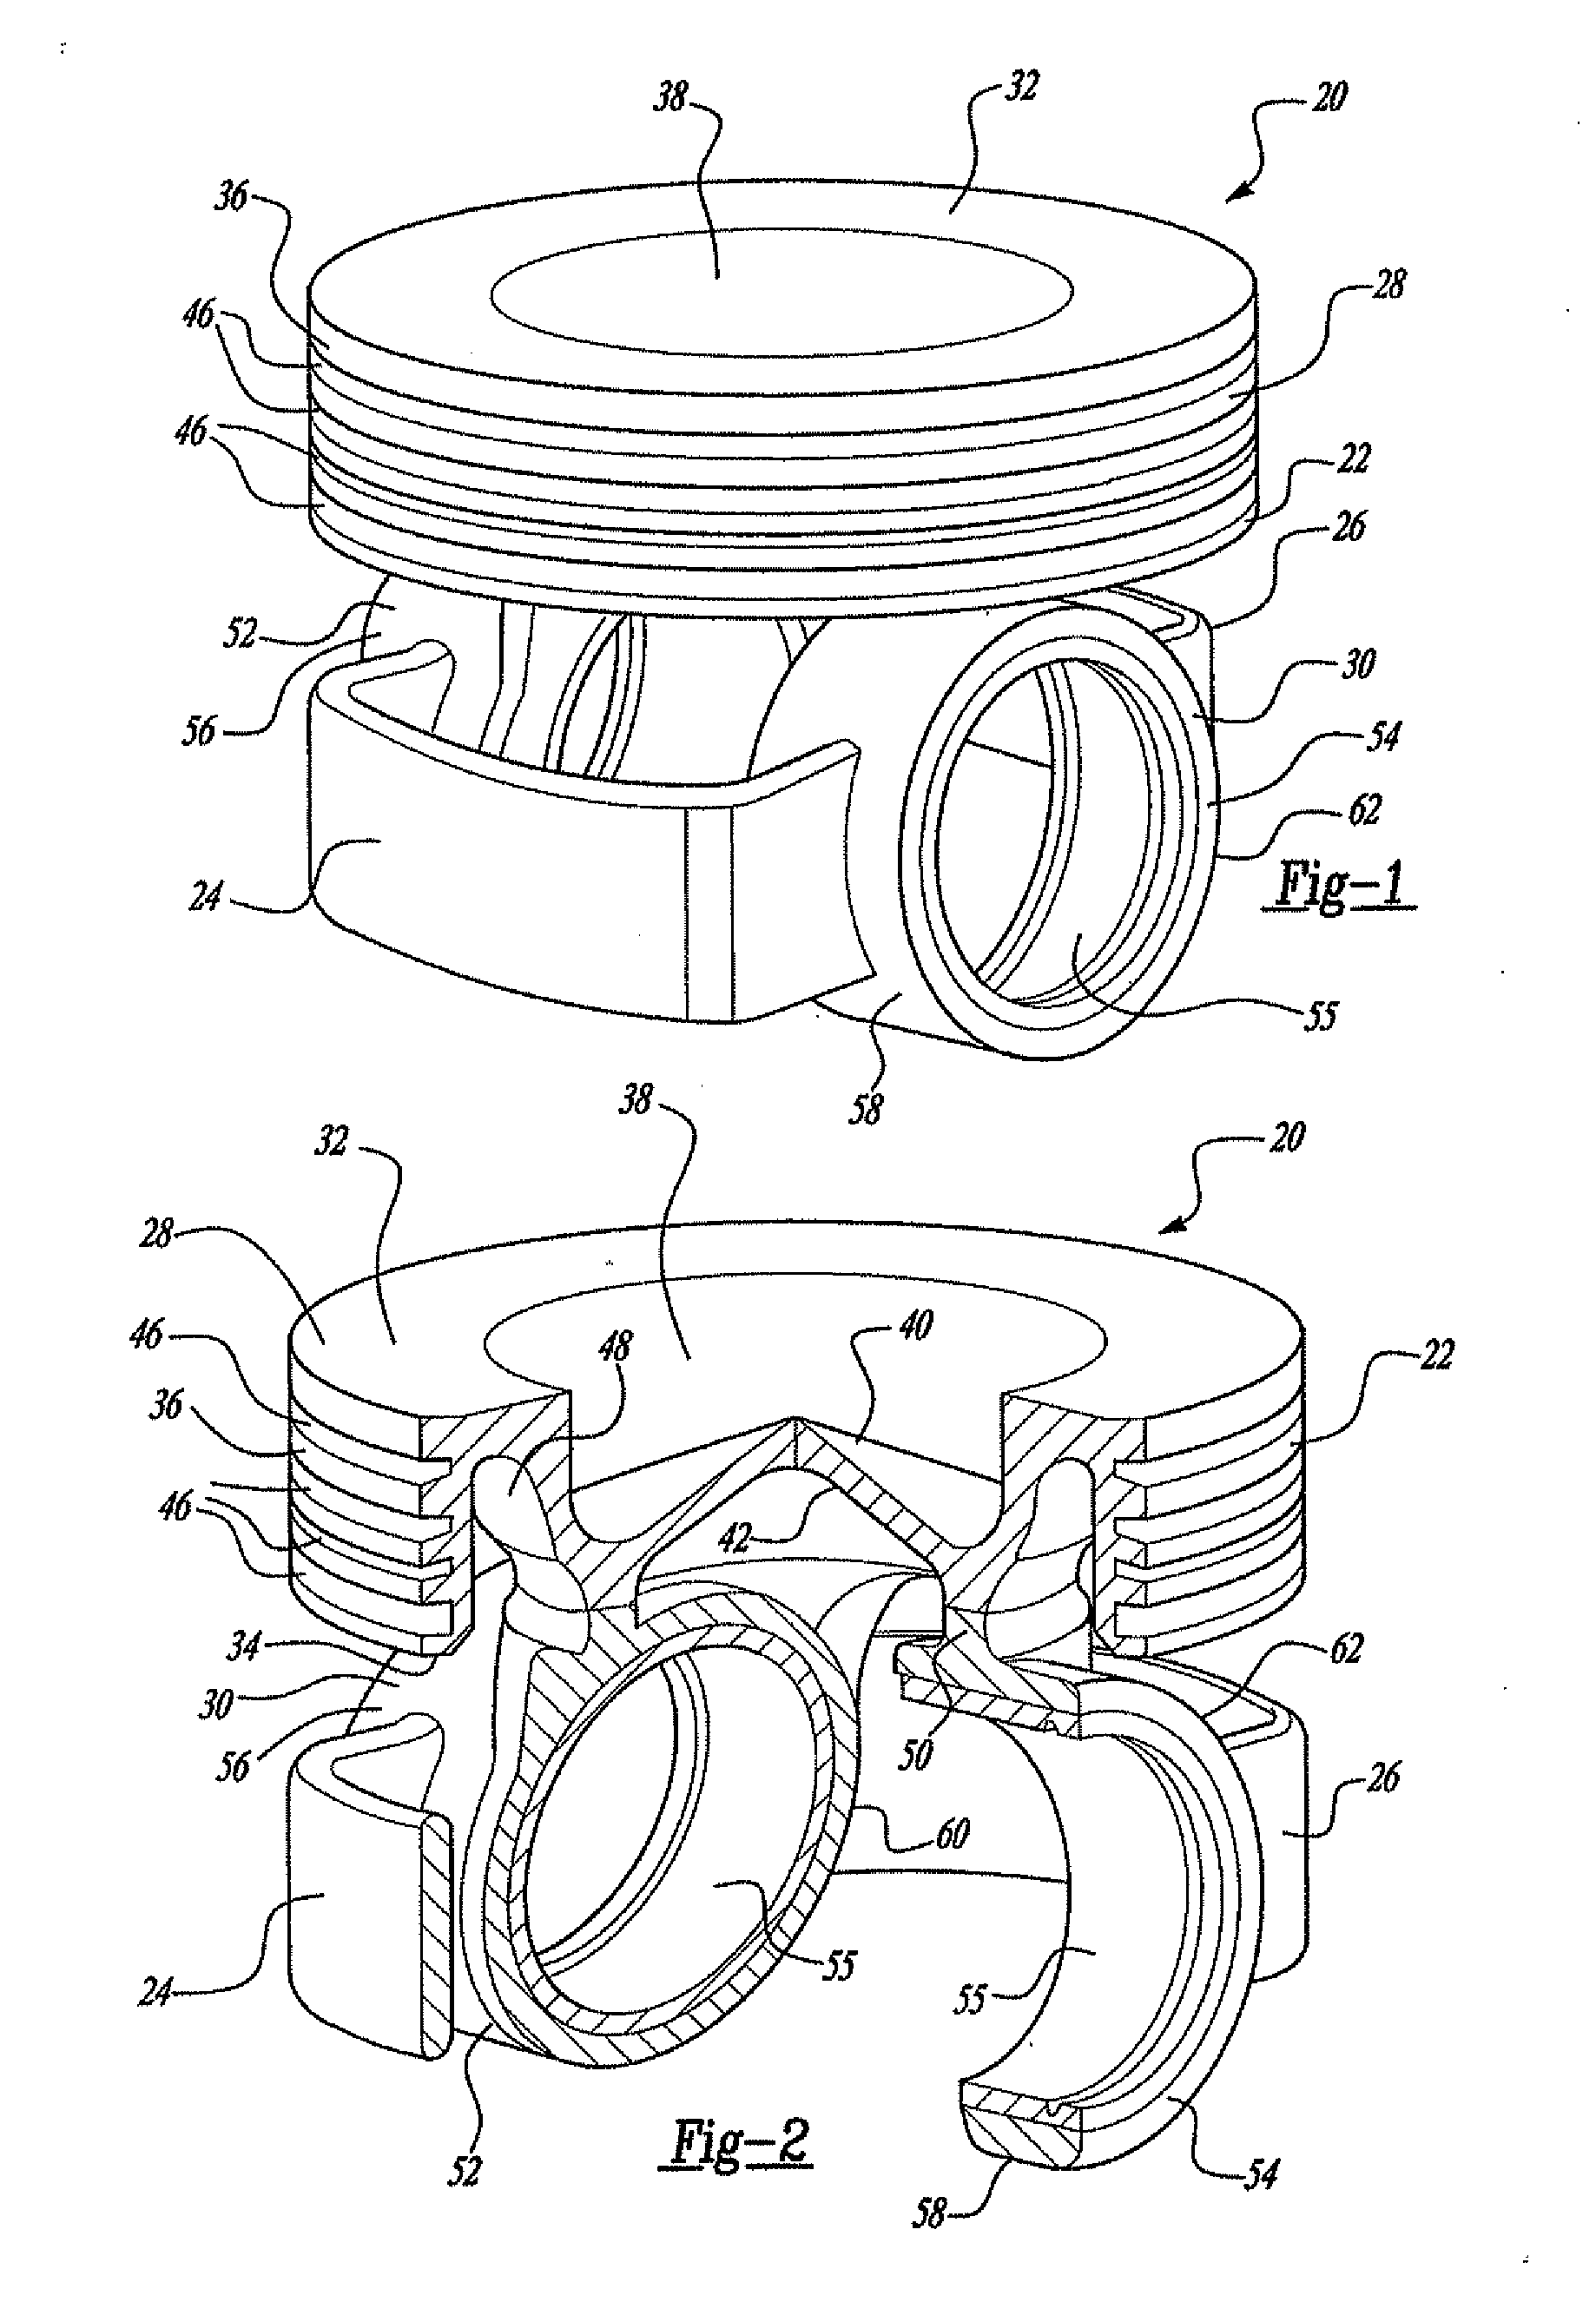 Load-optimized interior of a piston